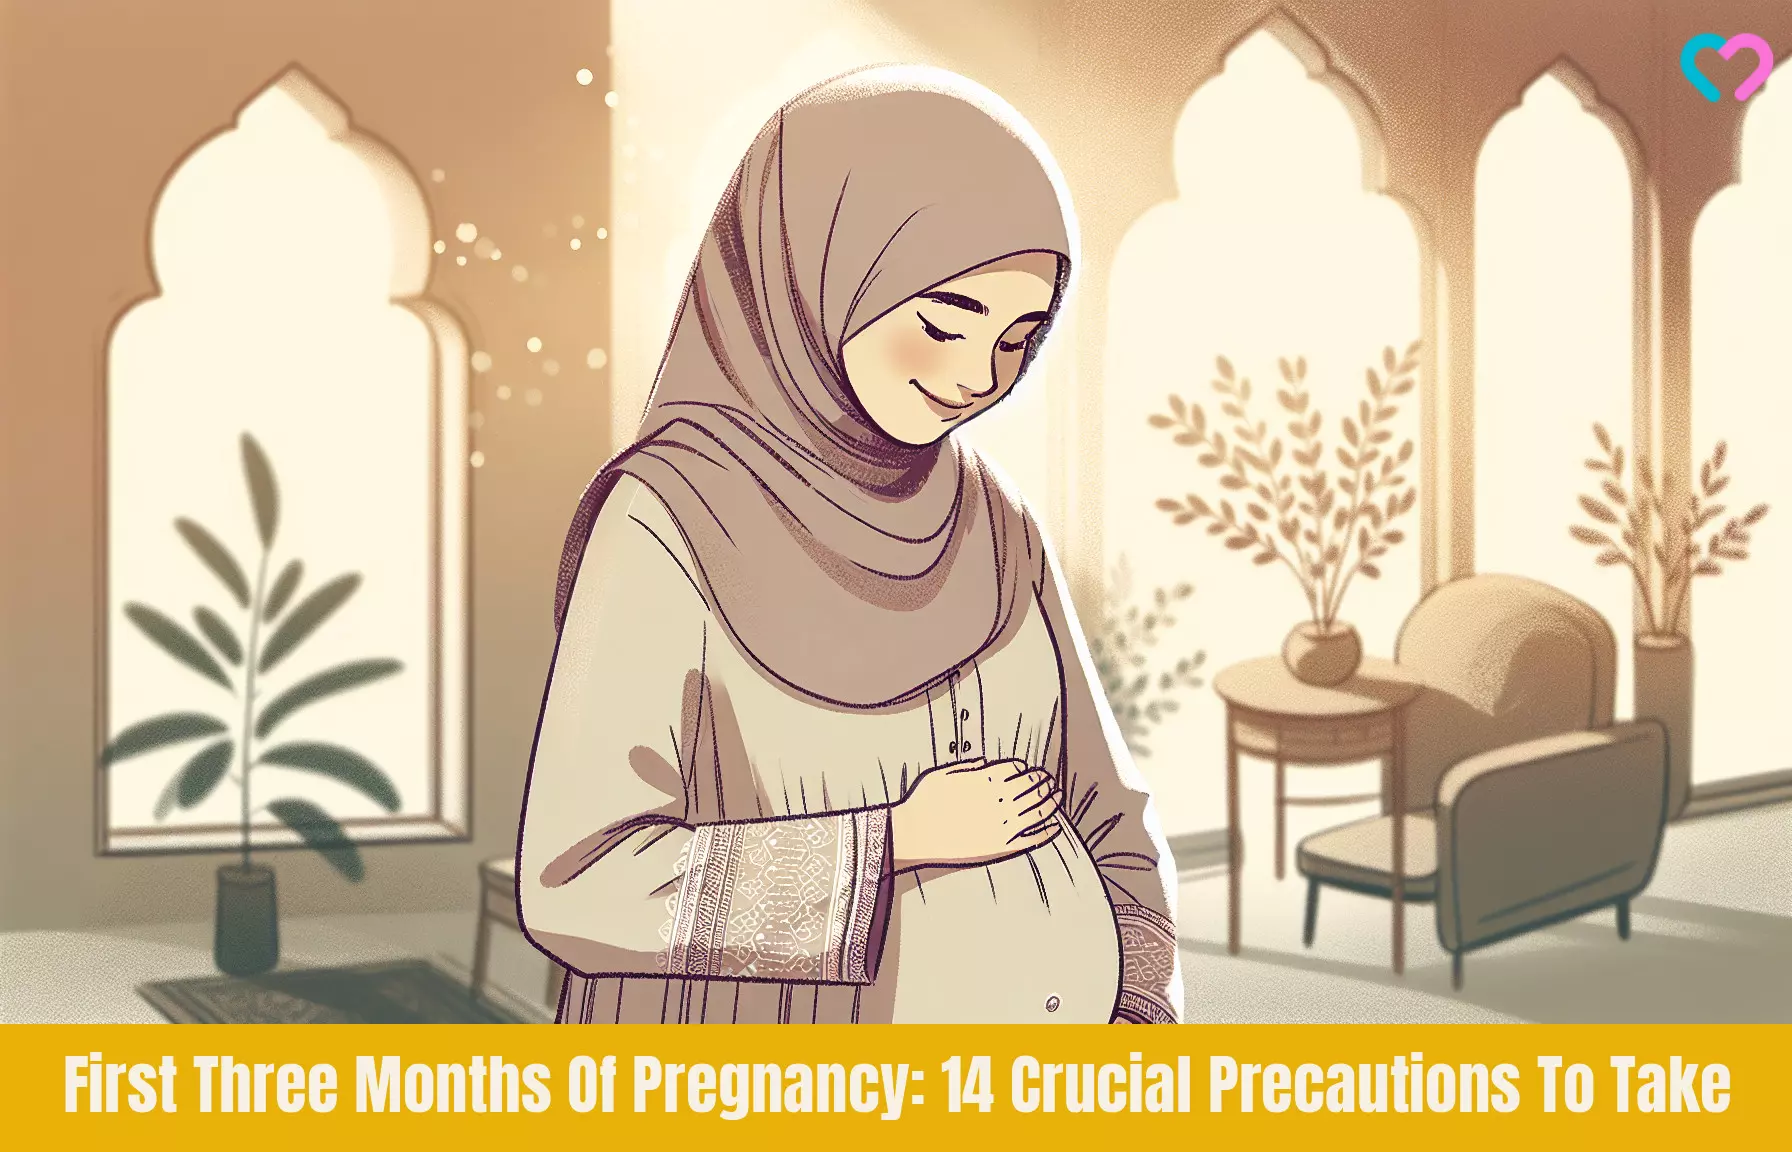 1st trimester of pregnancy precautions_illustration